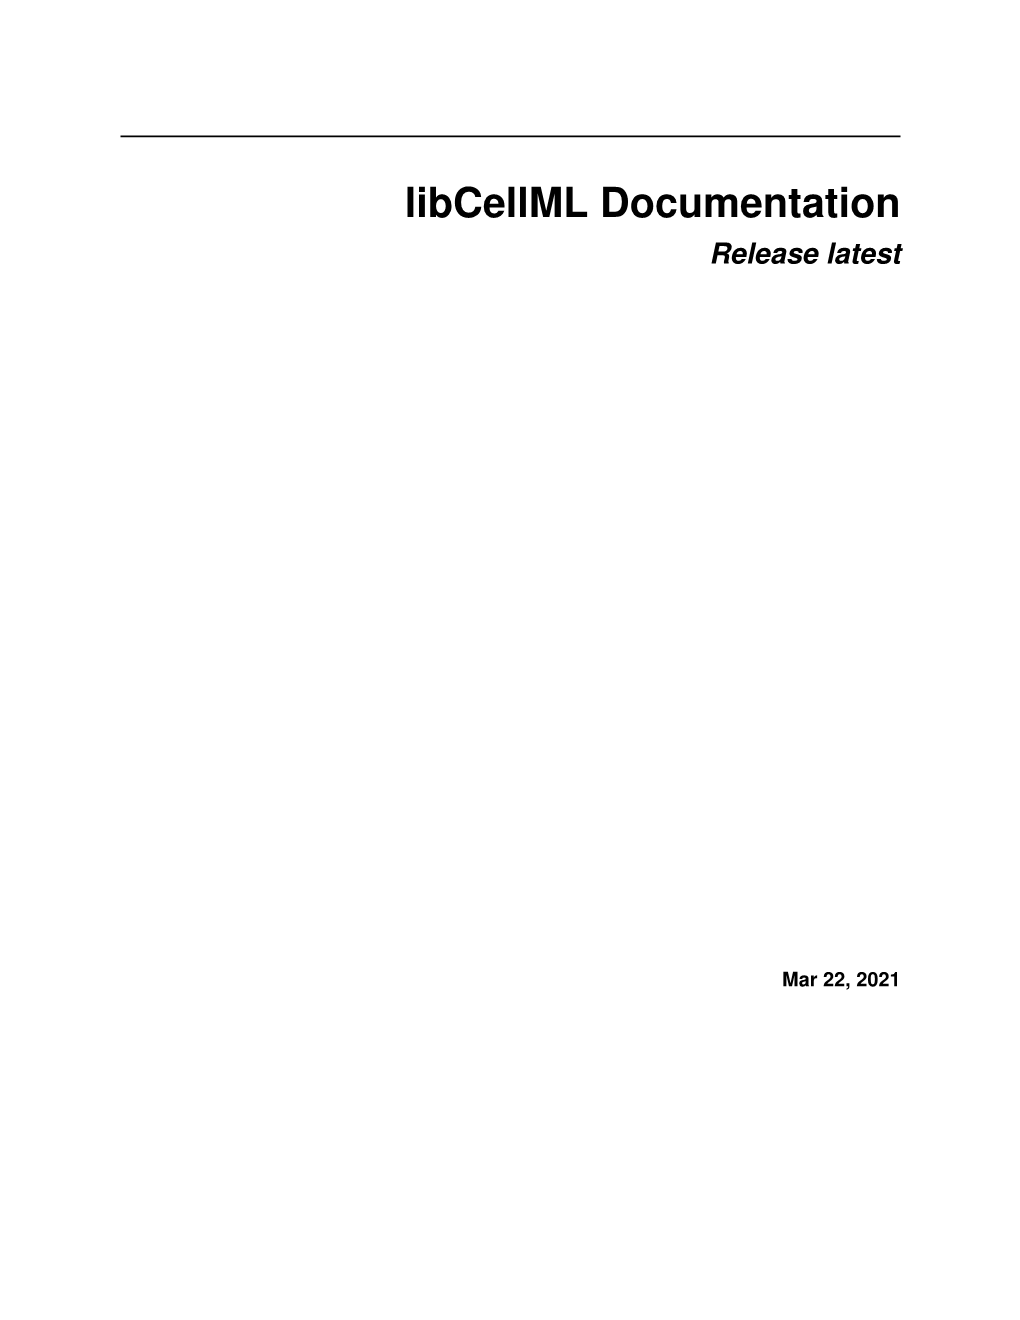 Libcellml Documentation Release Latest